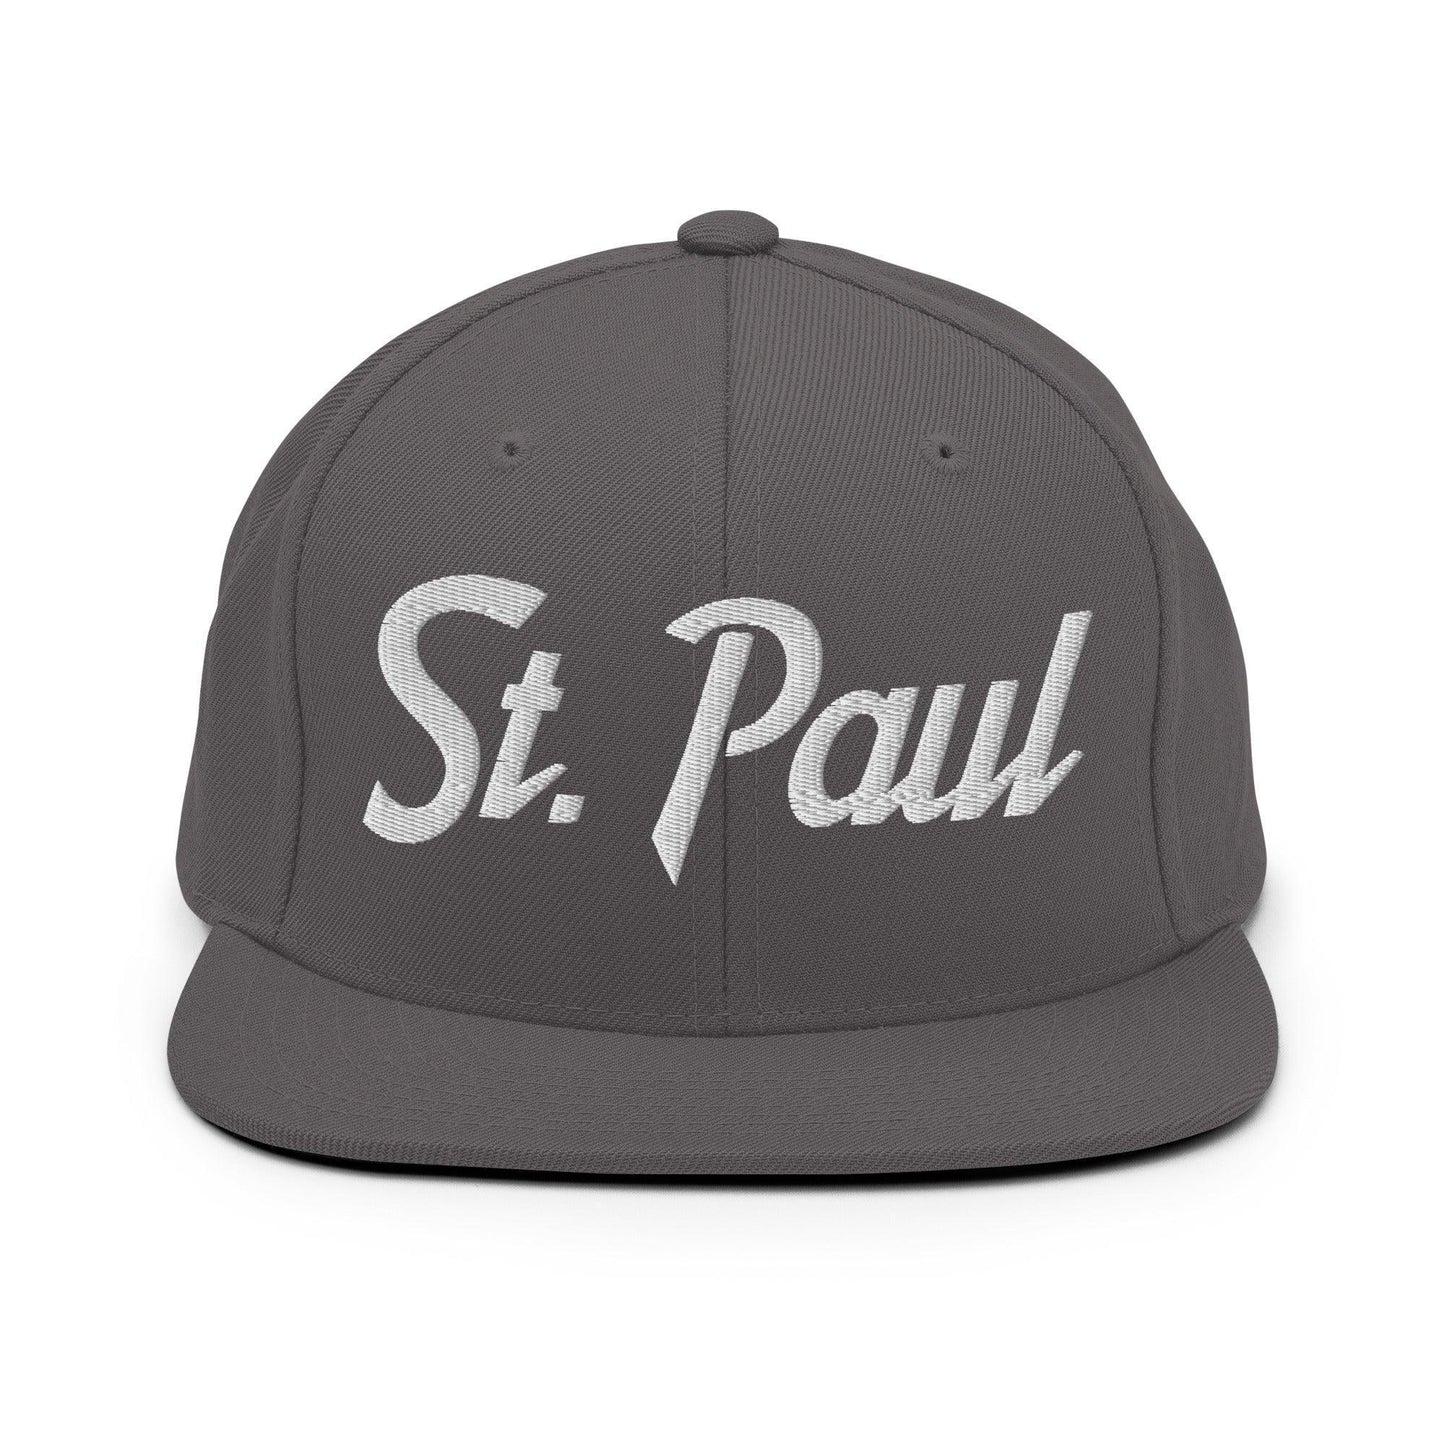 St. Paul Script Snapback Hat Dark Grey